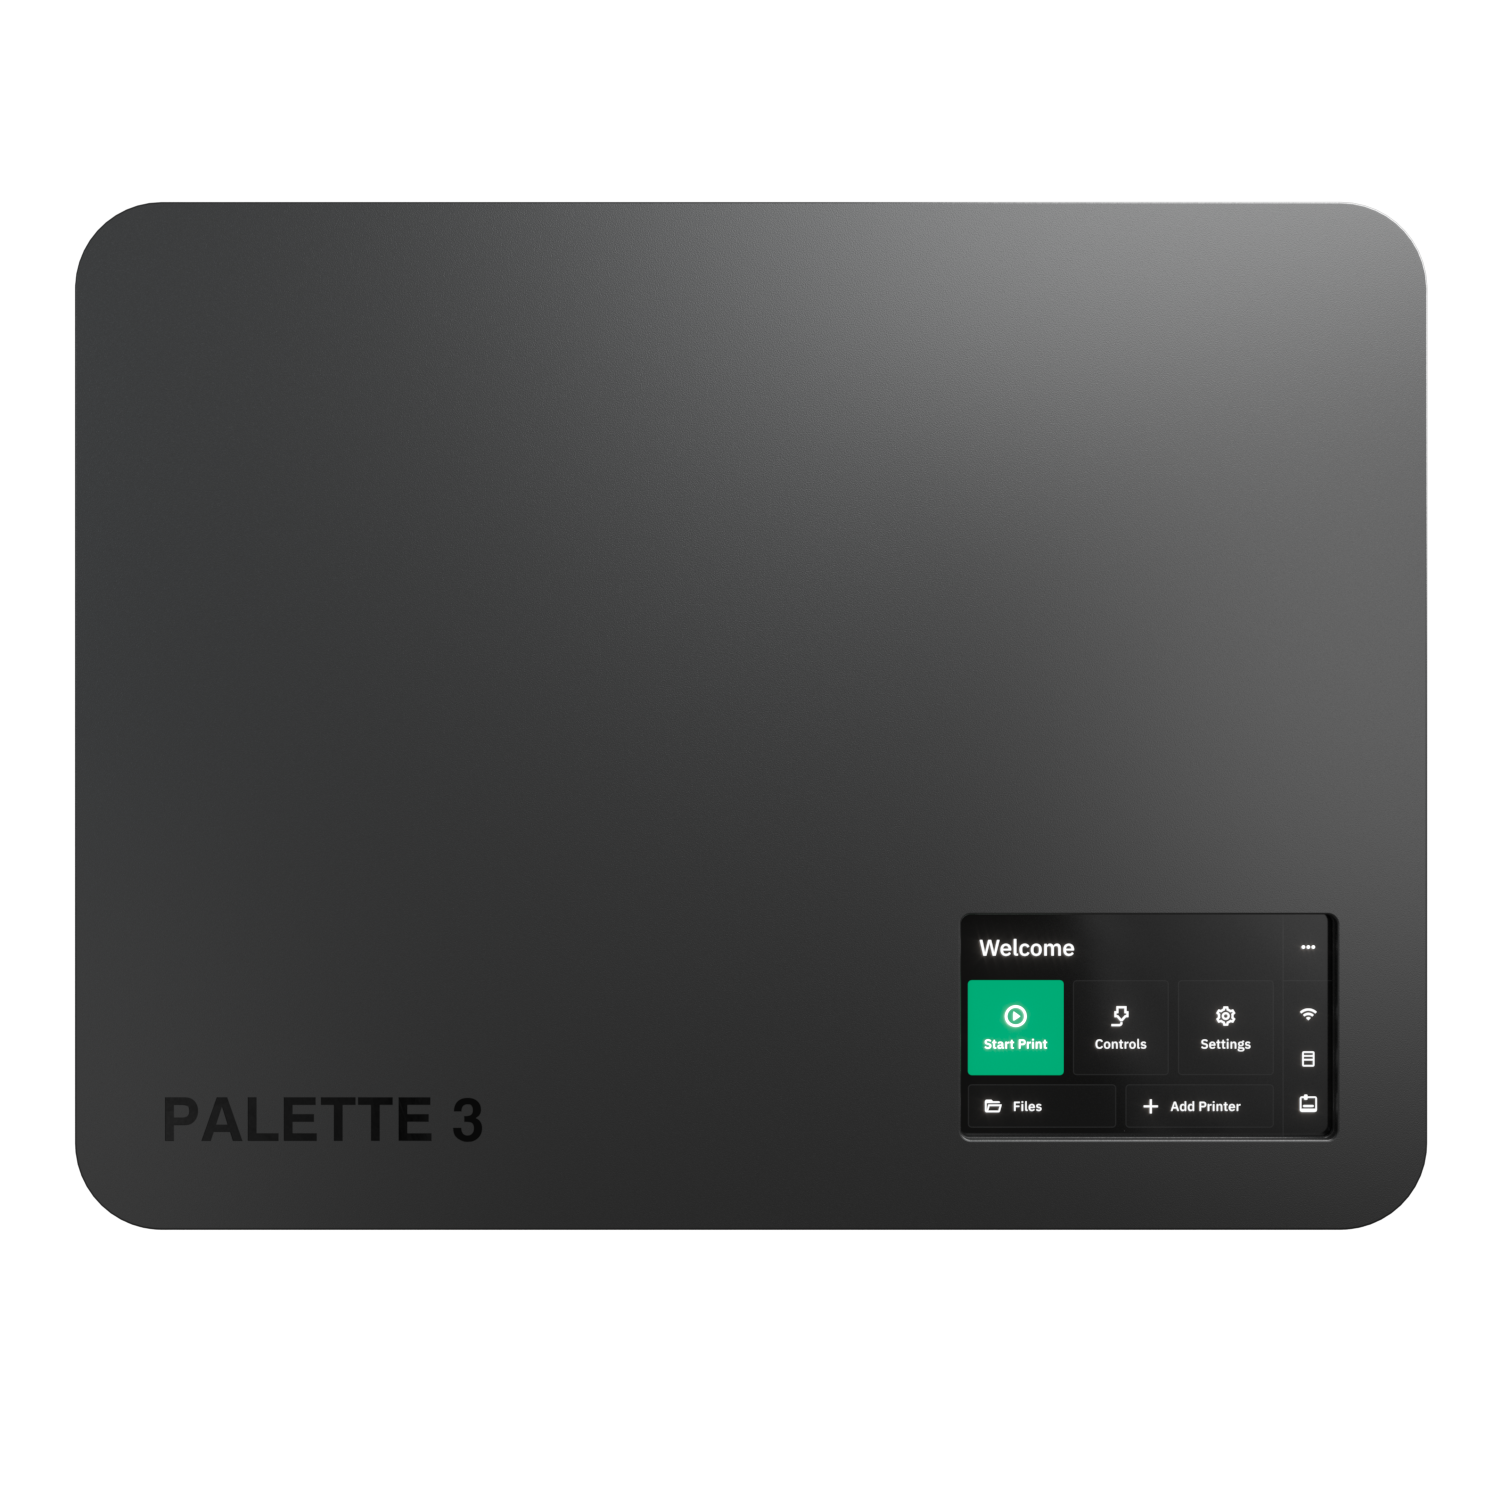 Palette 3 & Palette 3 Pro Update - June 2021